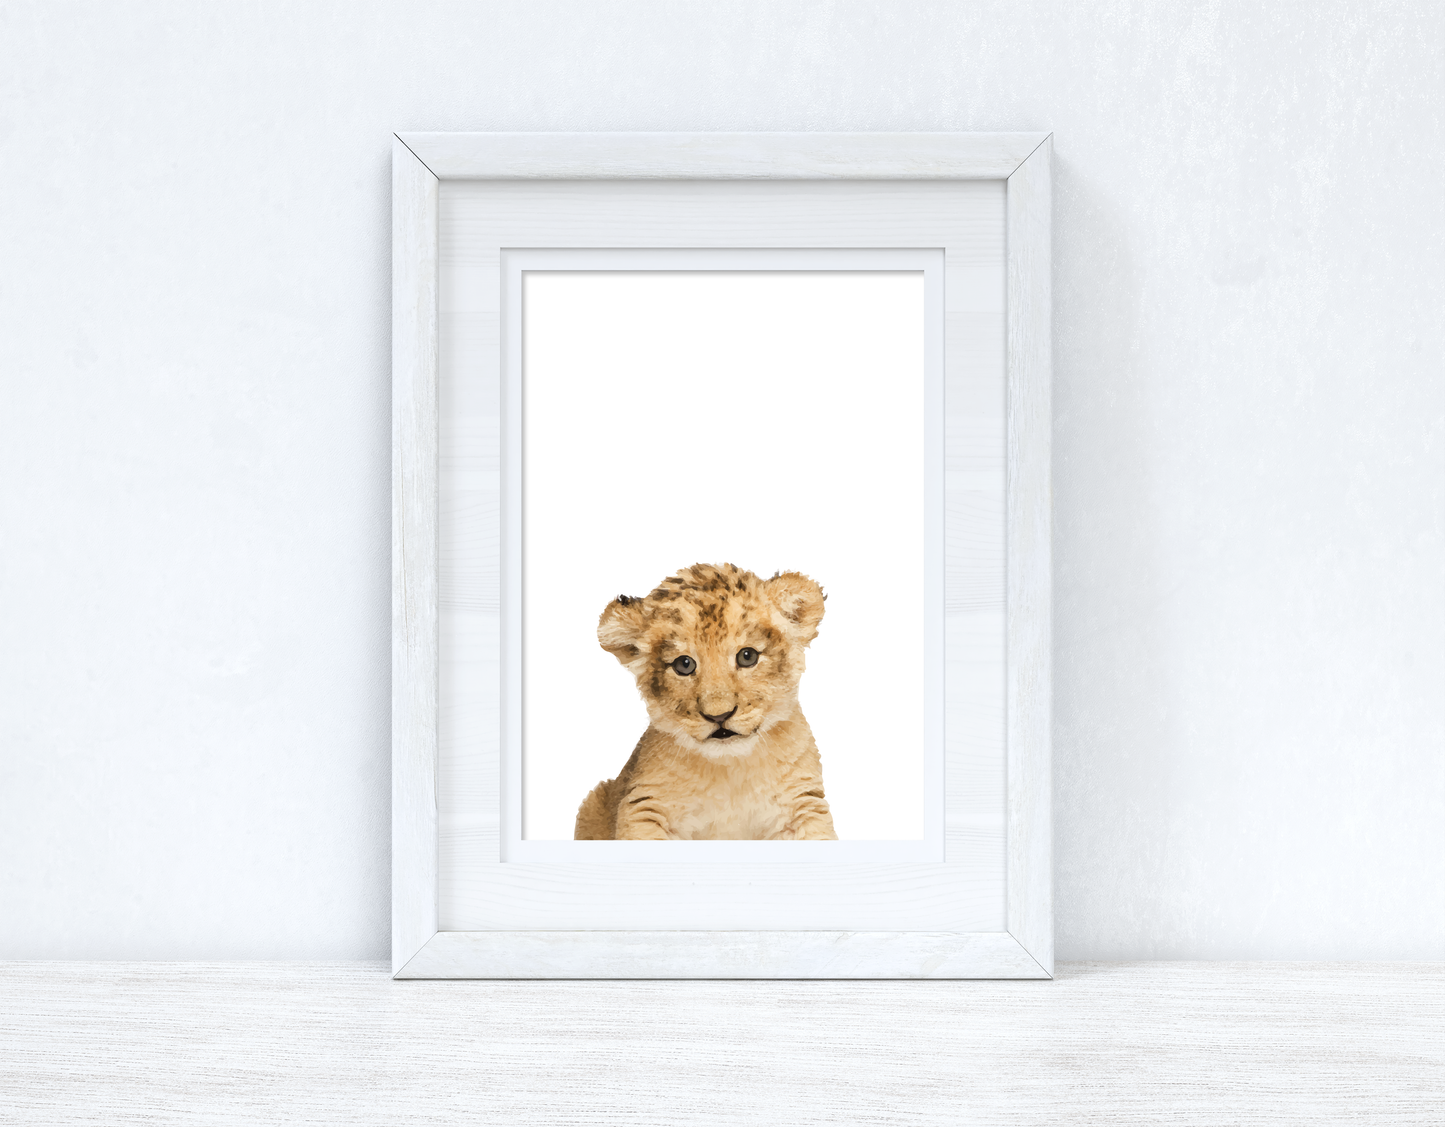 Baby Lion Wild Animal Unisex Nursery Children's Room Wall Decor Print